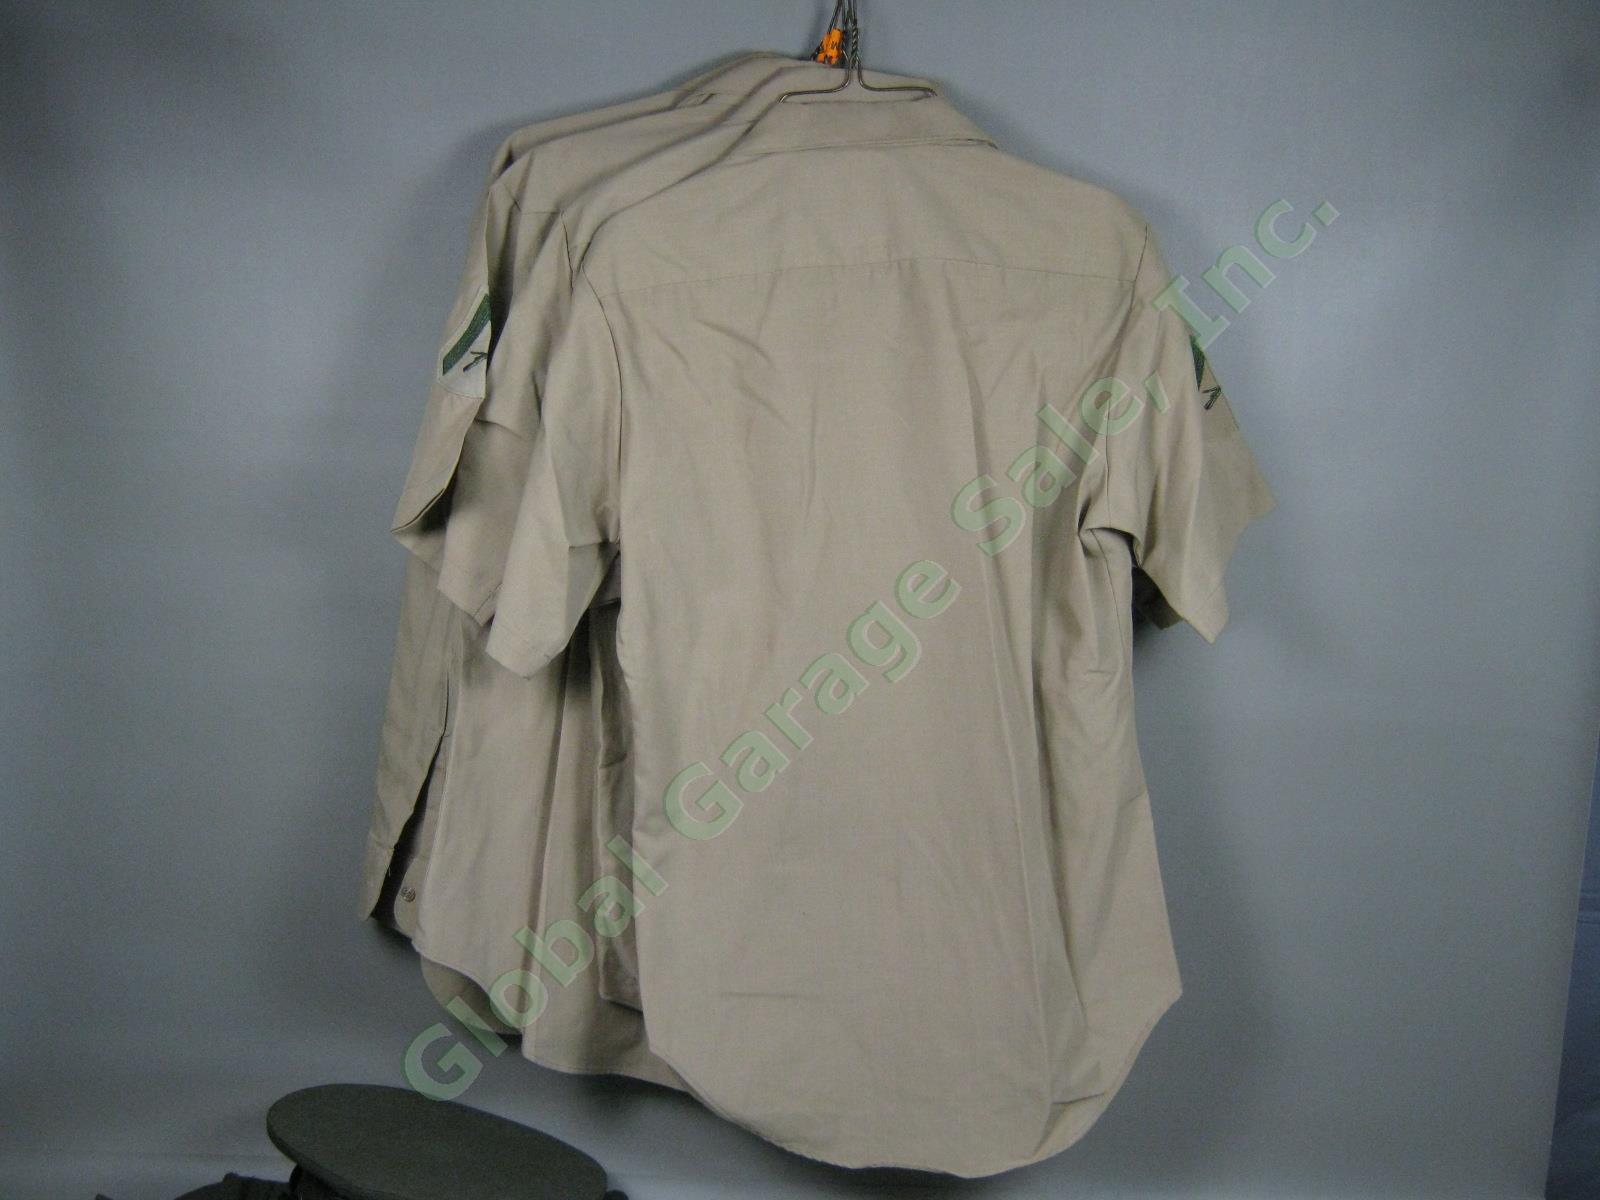 Huge USMC Marine Corps Charlie Uniform Pants Jackets Shirts Cap Lot Never Worn! 5